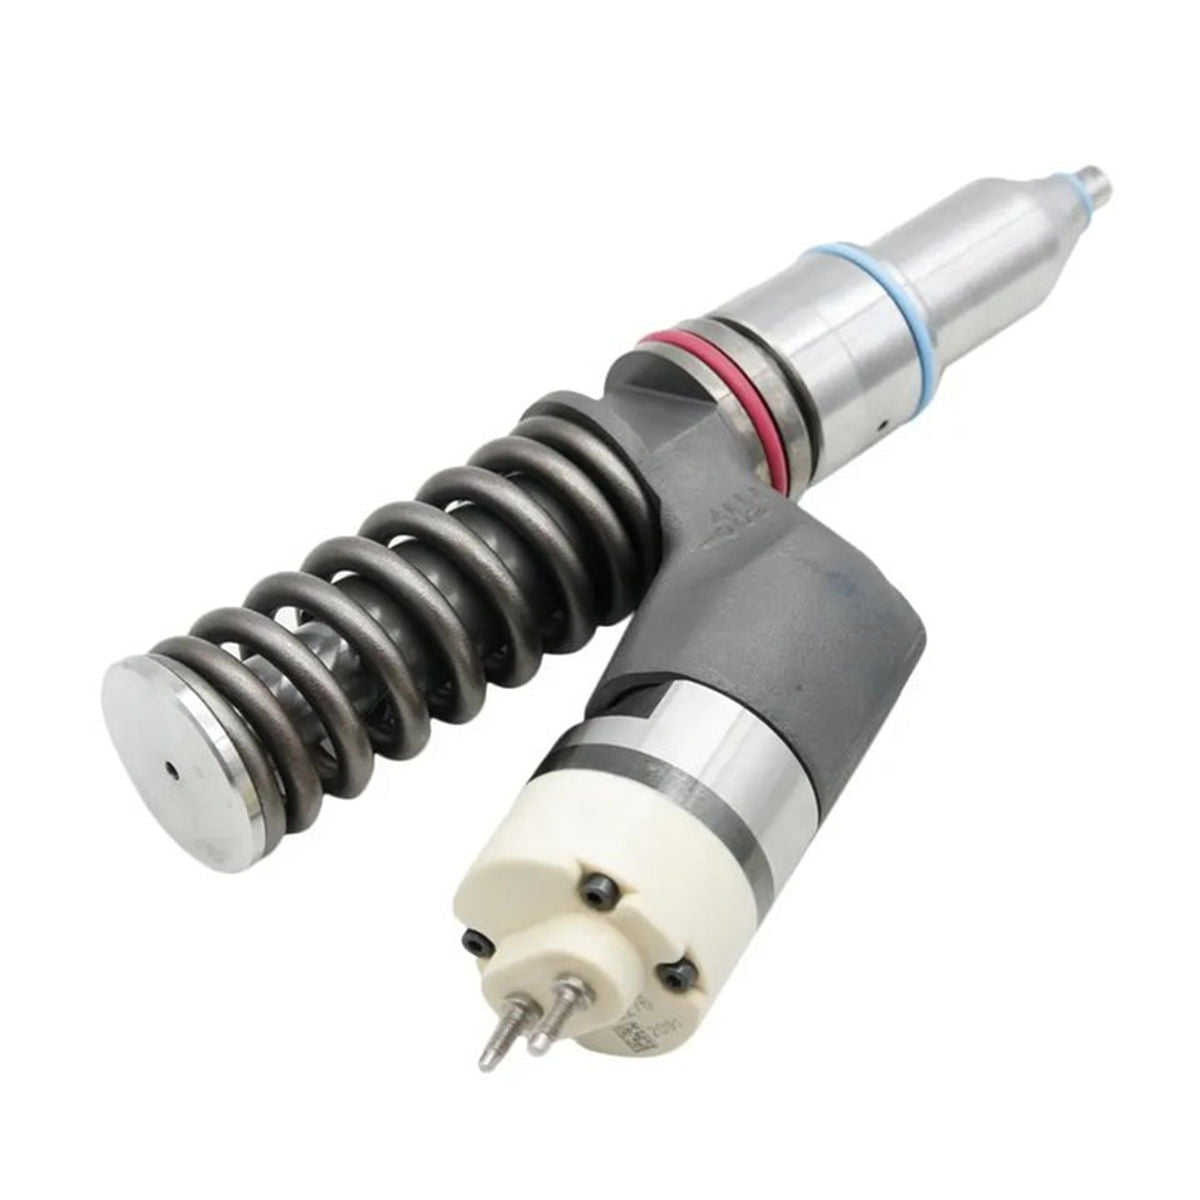 118-7929 0R-4895 Fuel Injector for Caterpillar 3406E Diesel Engine - Sinocmp